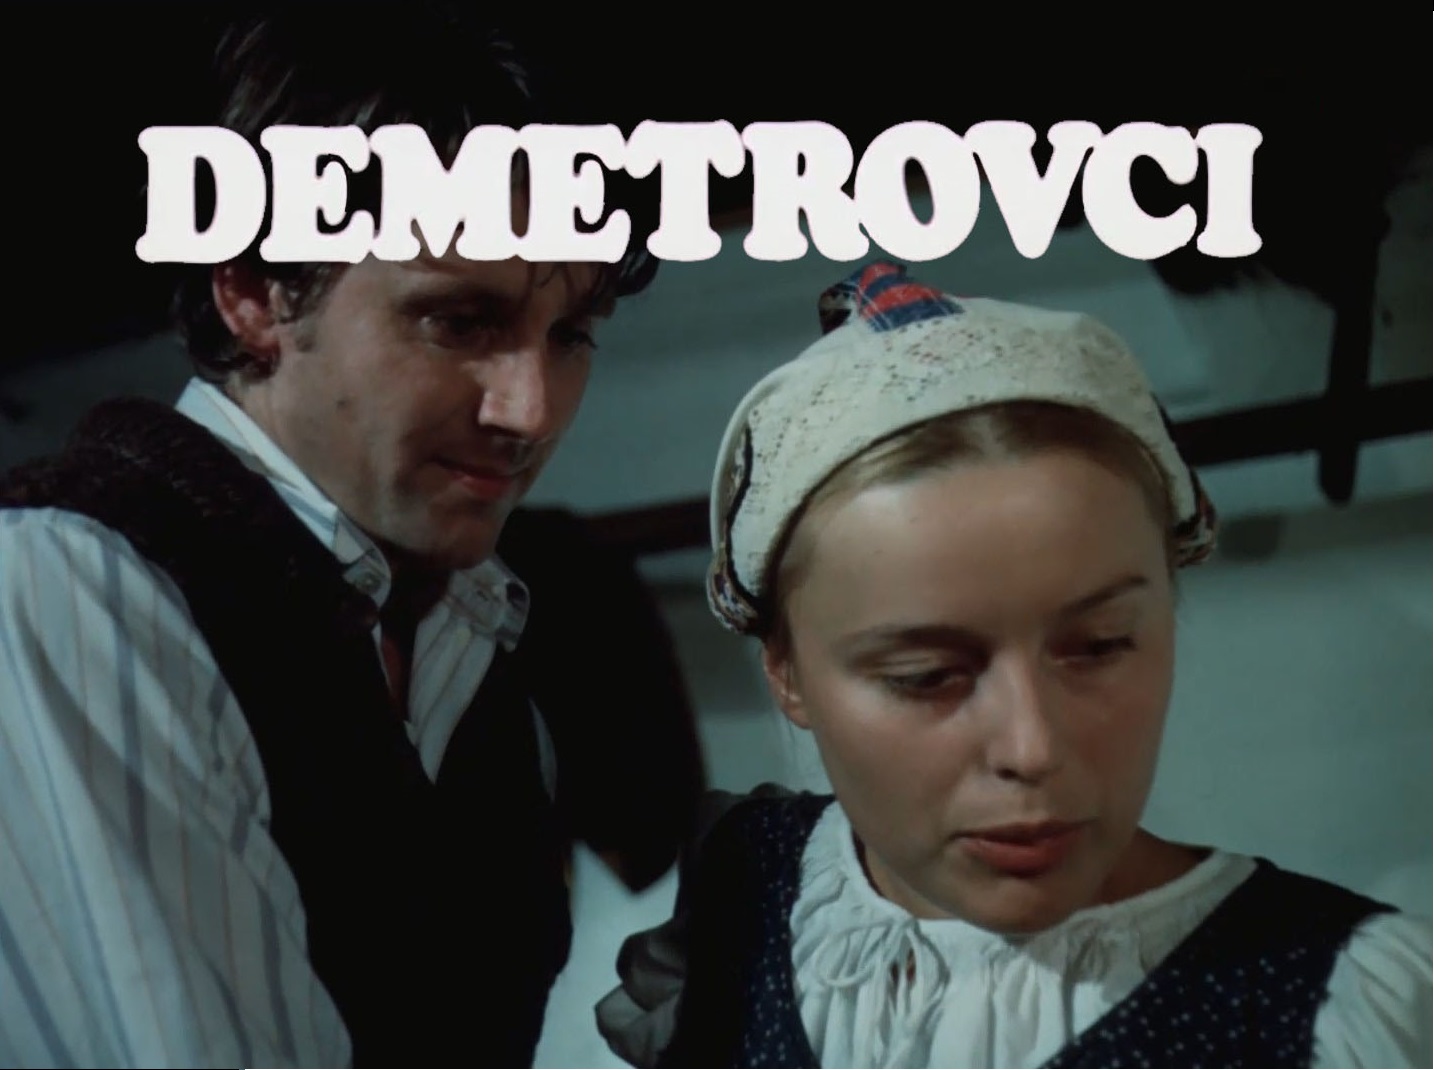 Stiahni si Filmy CZ/SK dabing Demeterovci (1976)(SK)[TVRip] = CSFD 82%